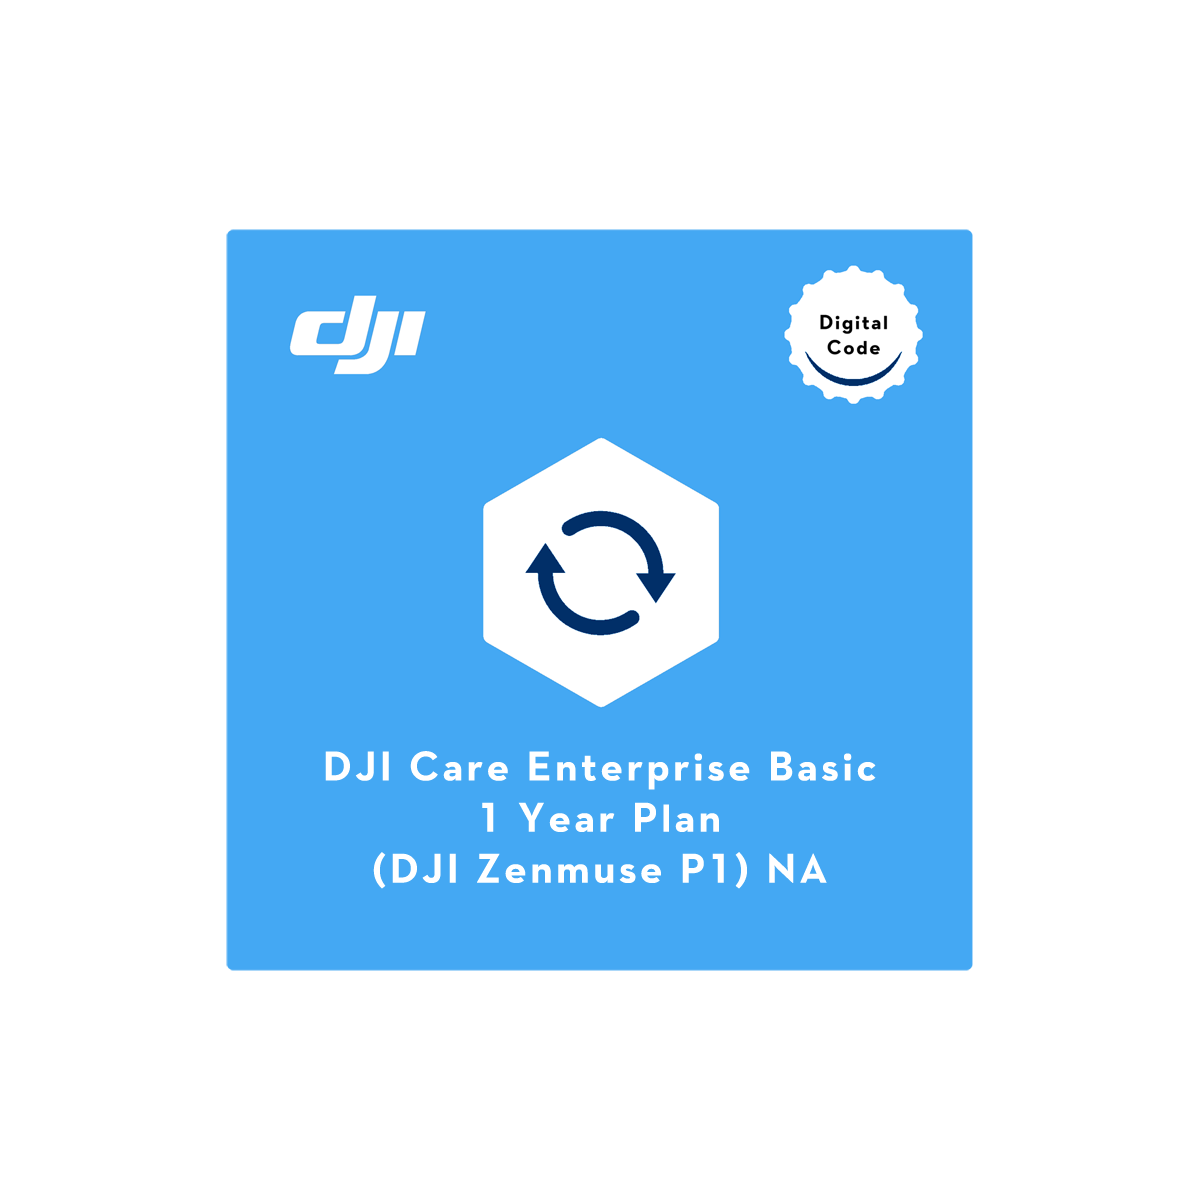 DJI Care Enterprise Basic (P1) NA